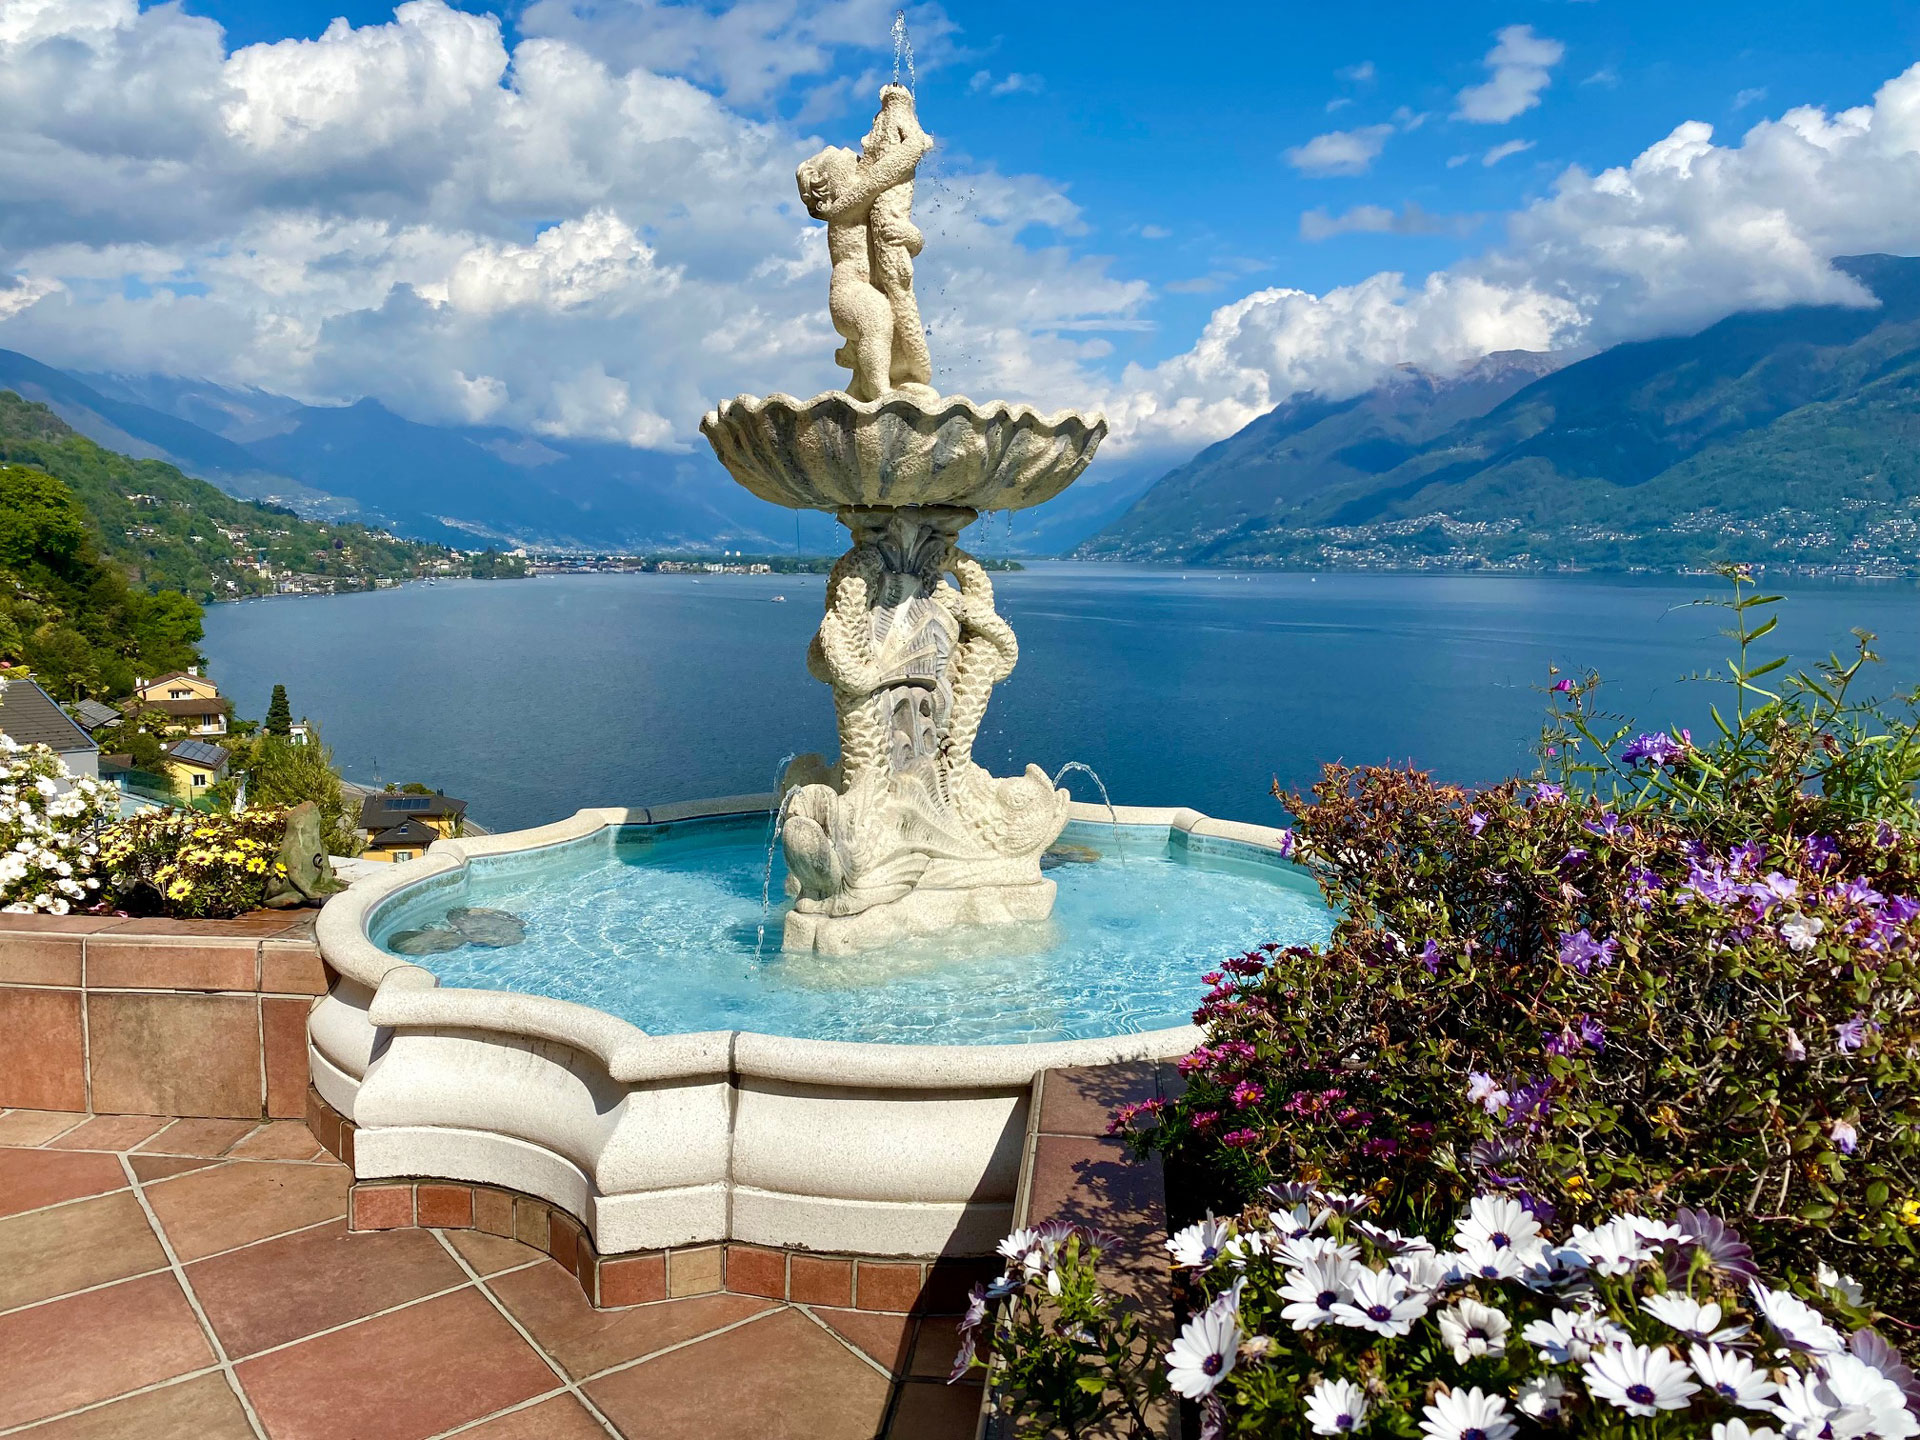 Southern Switzerland 3 Days Trip – Ascona, Locarno, Lugano & gems like Foroglio, Gerra, Morcote, Bosco Gurin & much more (Bern)